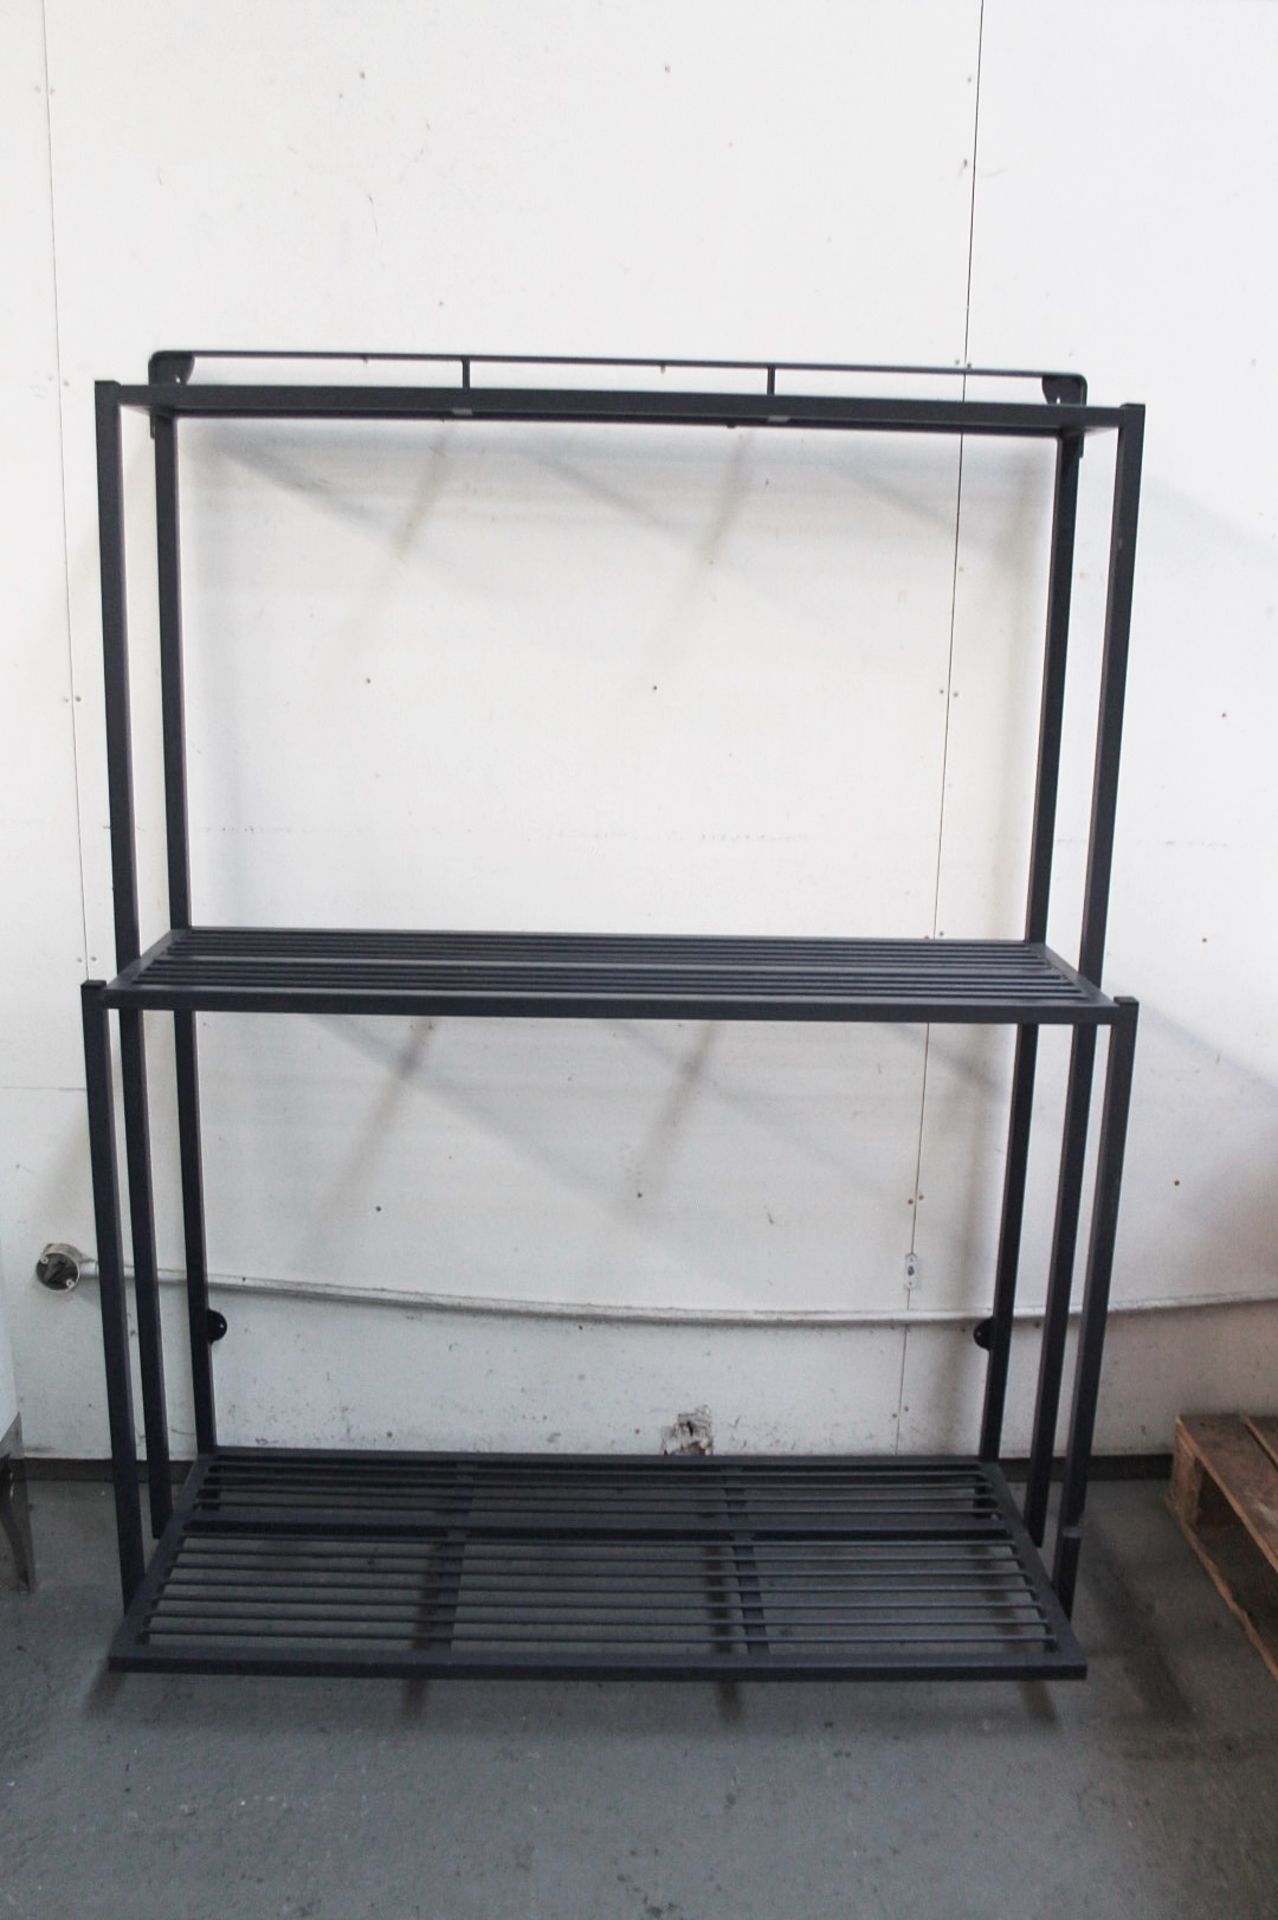 1 x Metal Wall Mounted Shelving Unit - Dimensions: H166.5 x W125 x D50cm - Ex-Showroom Piece -